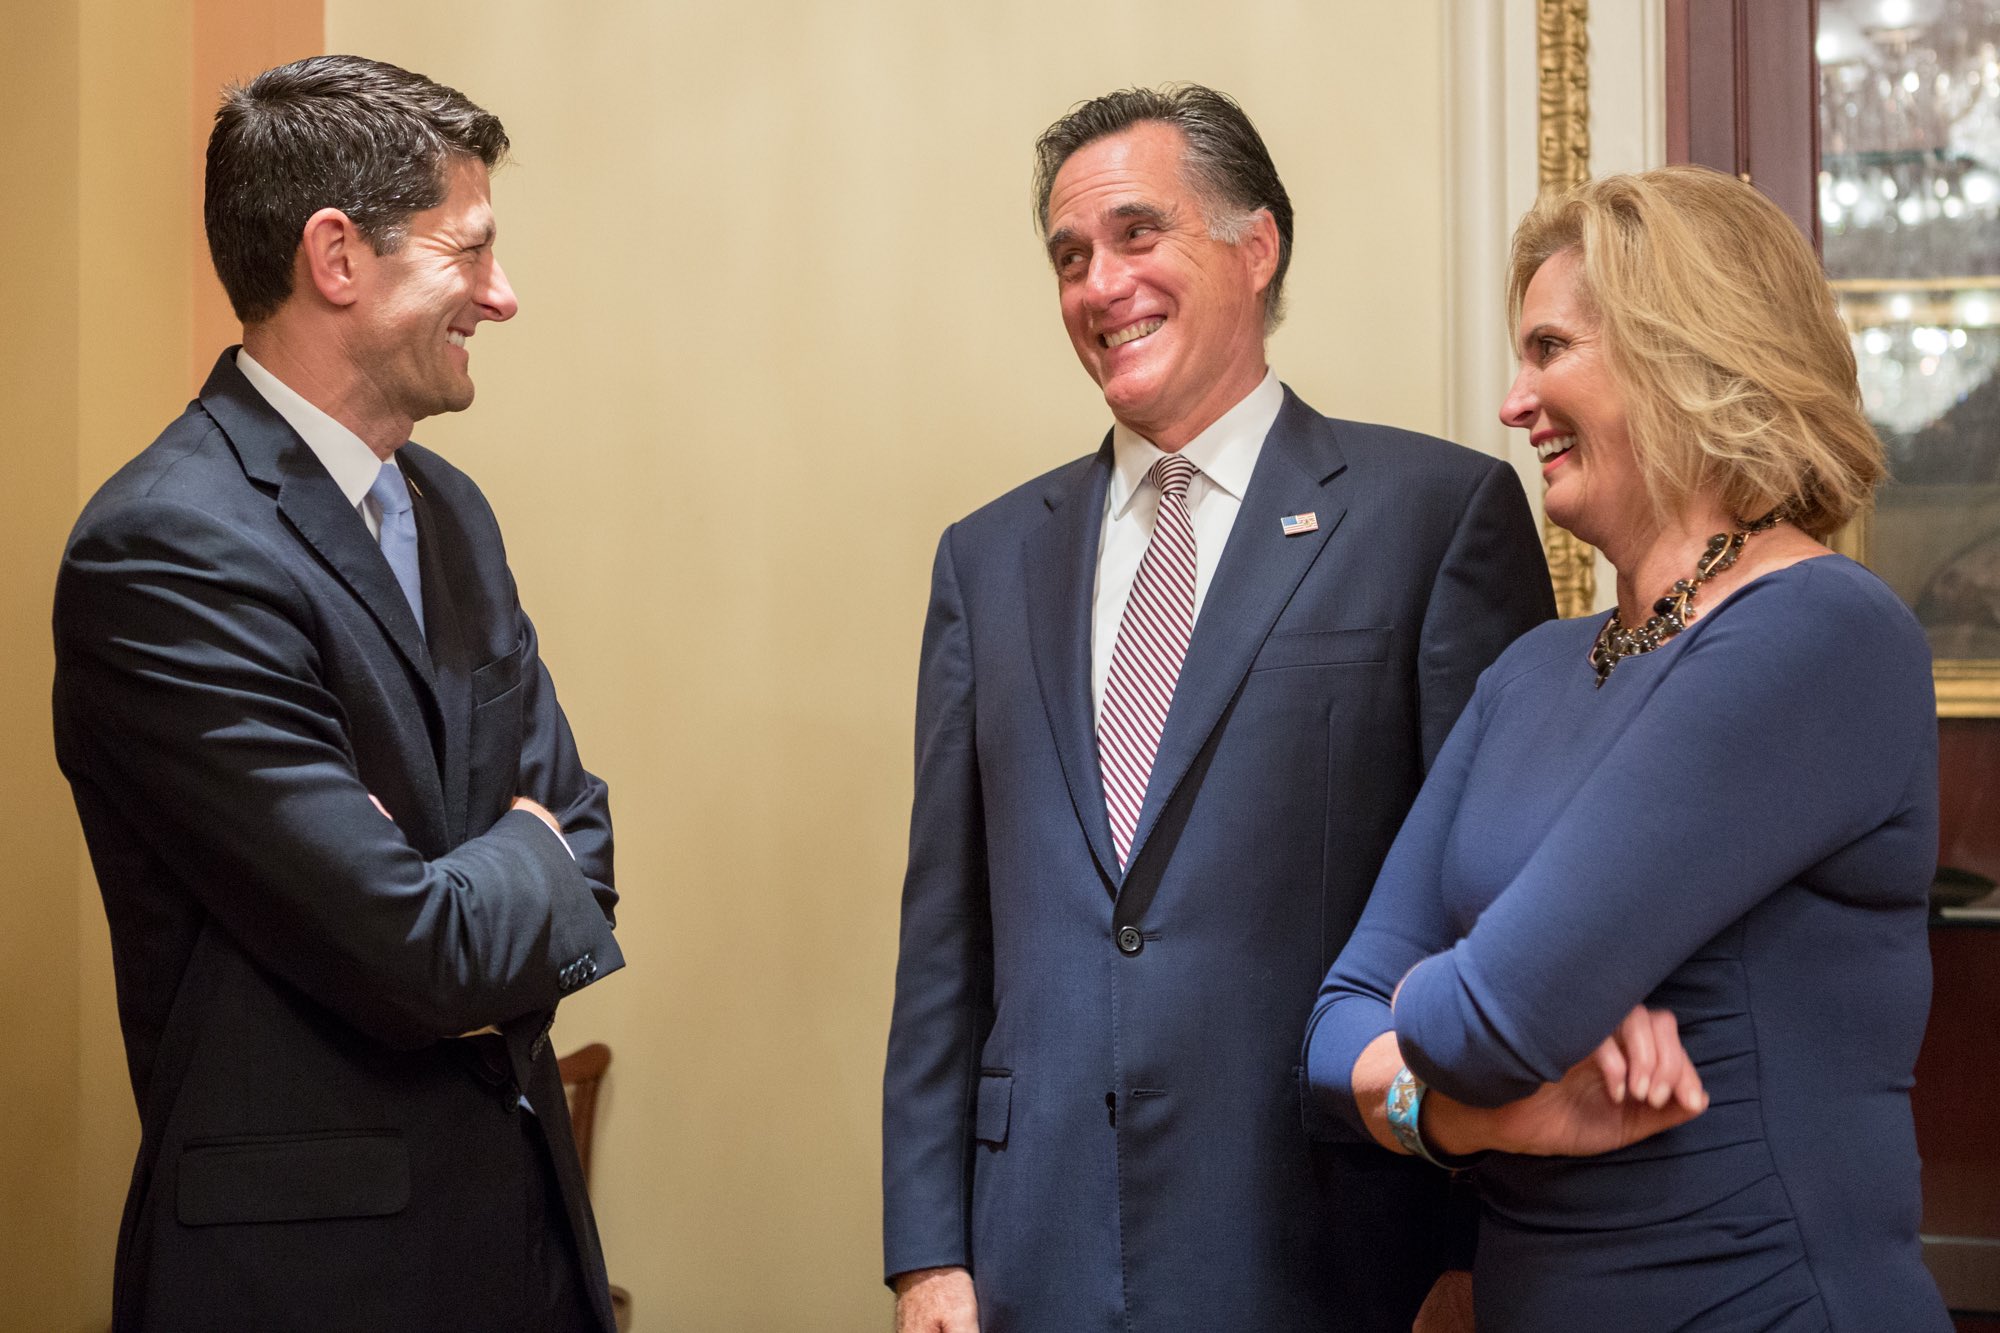 Happy Birthday to my good friend Mitt Romney! 